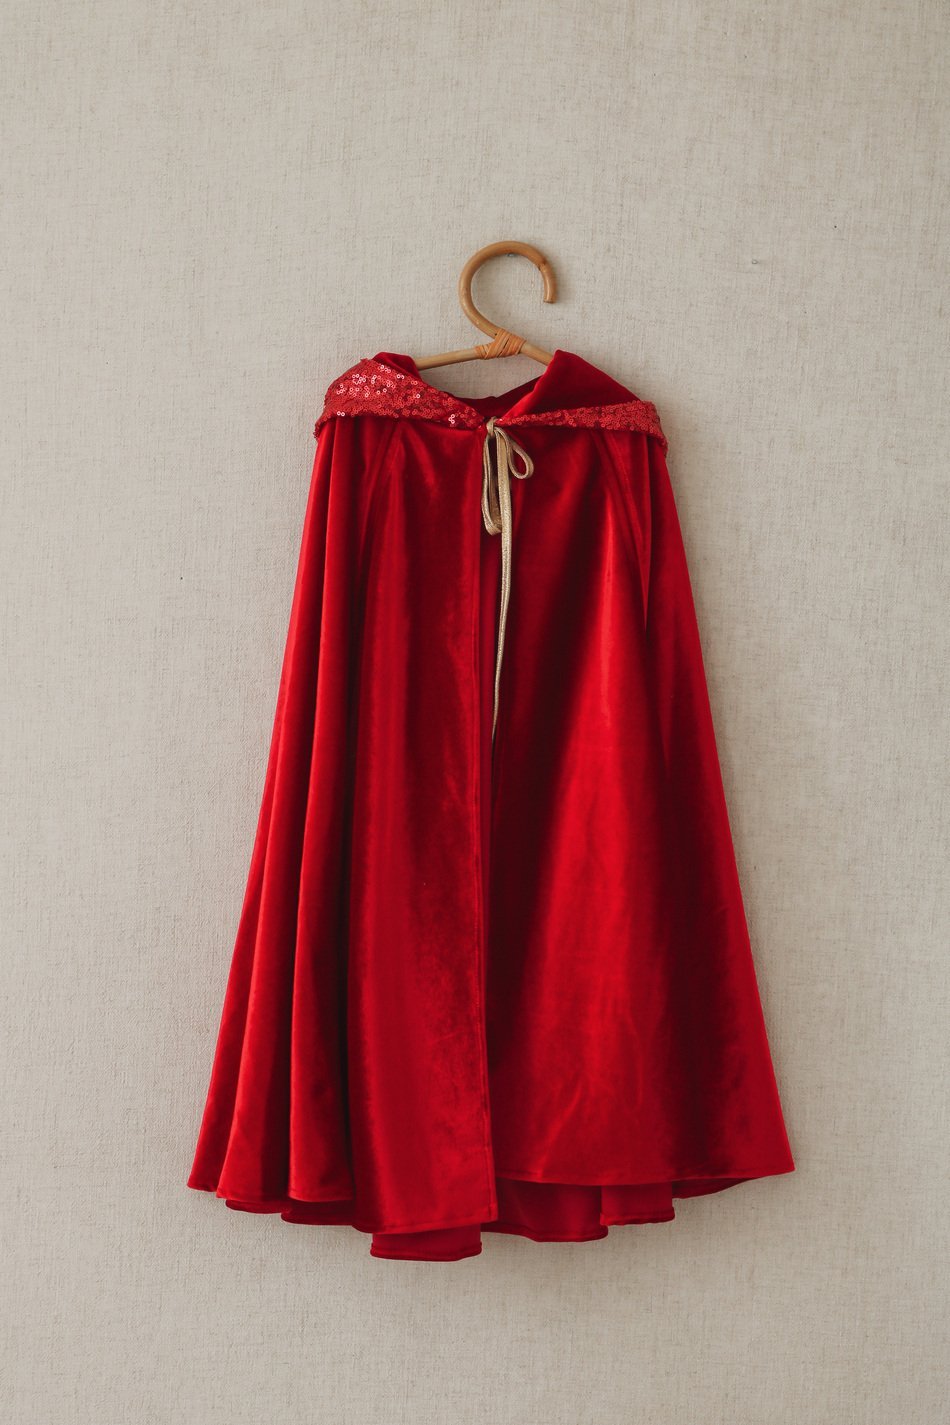 Moi Mili Moi Mili Magische Cape "Little Red Riding Hood" - Decomusy